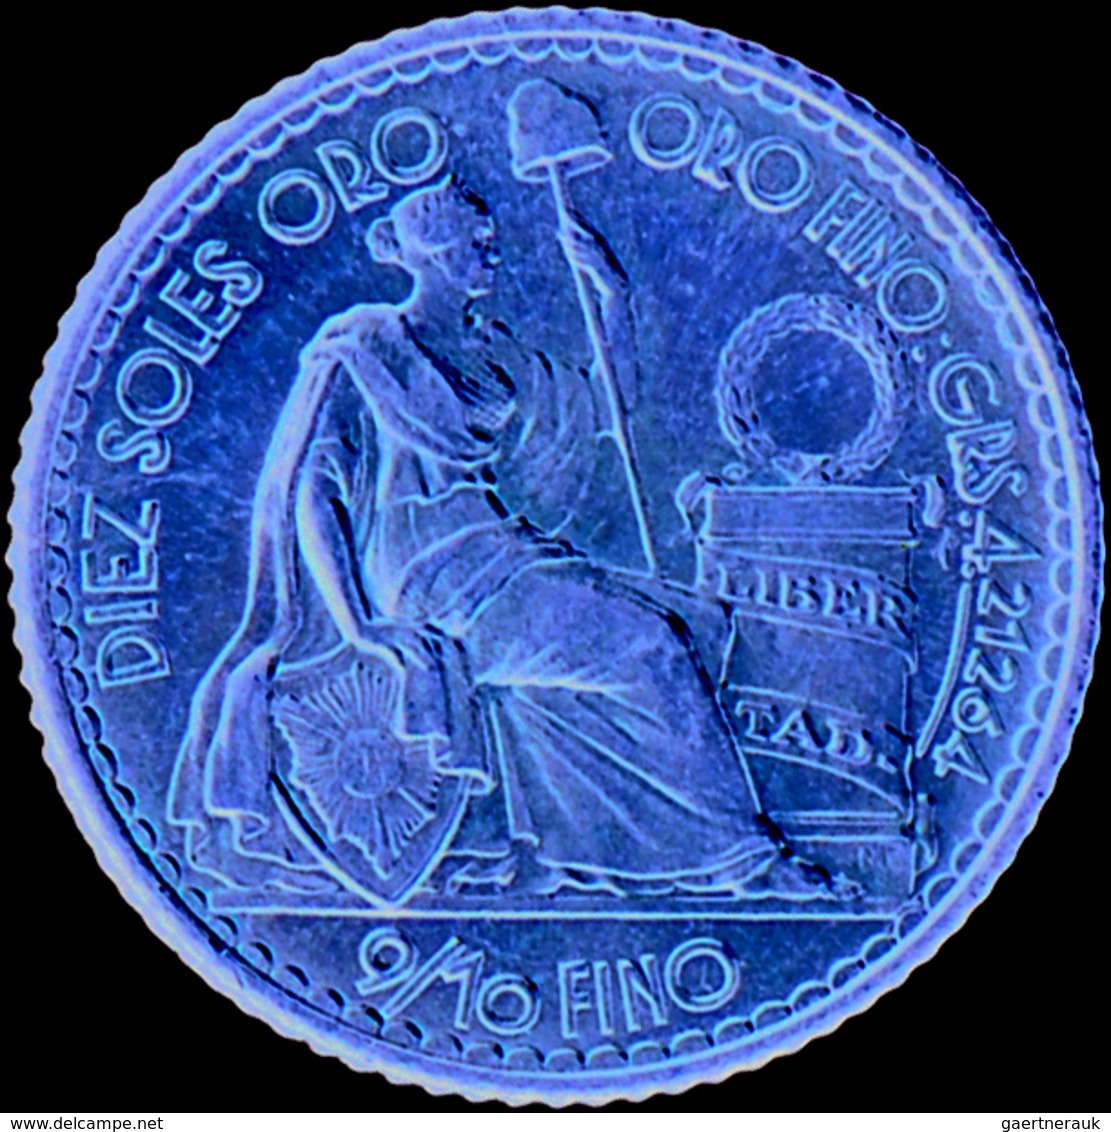 Peru - Anlagegold: Lot 5 Goldmünzen: 5 Soles 1963, KM # 235, Friedberg 82, stempelglanz / 10 Soles 1